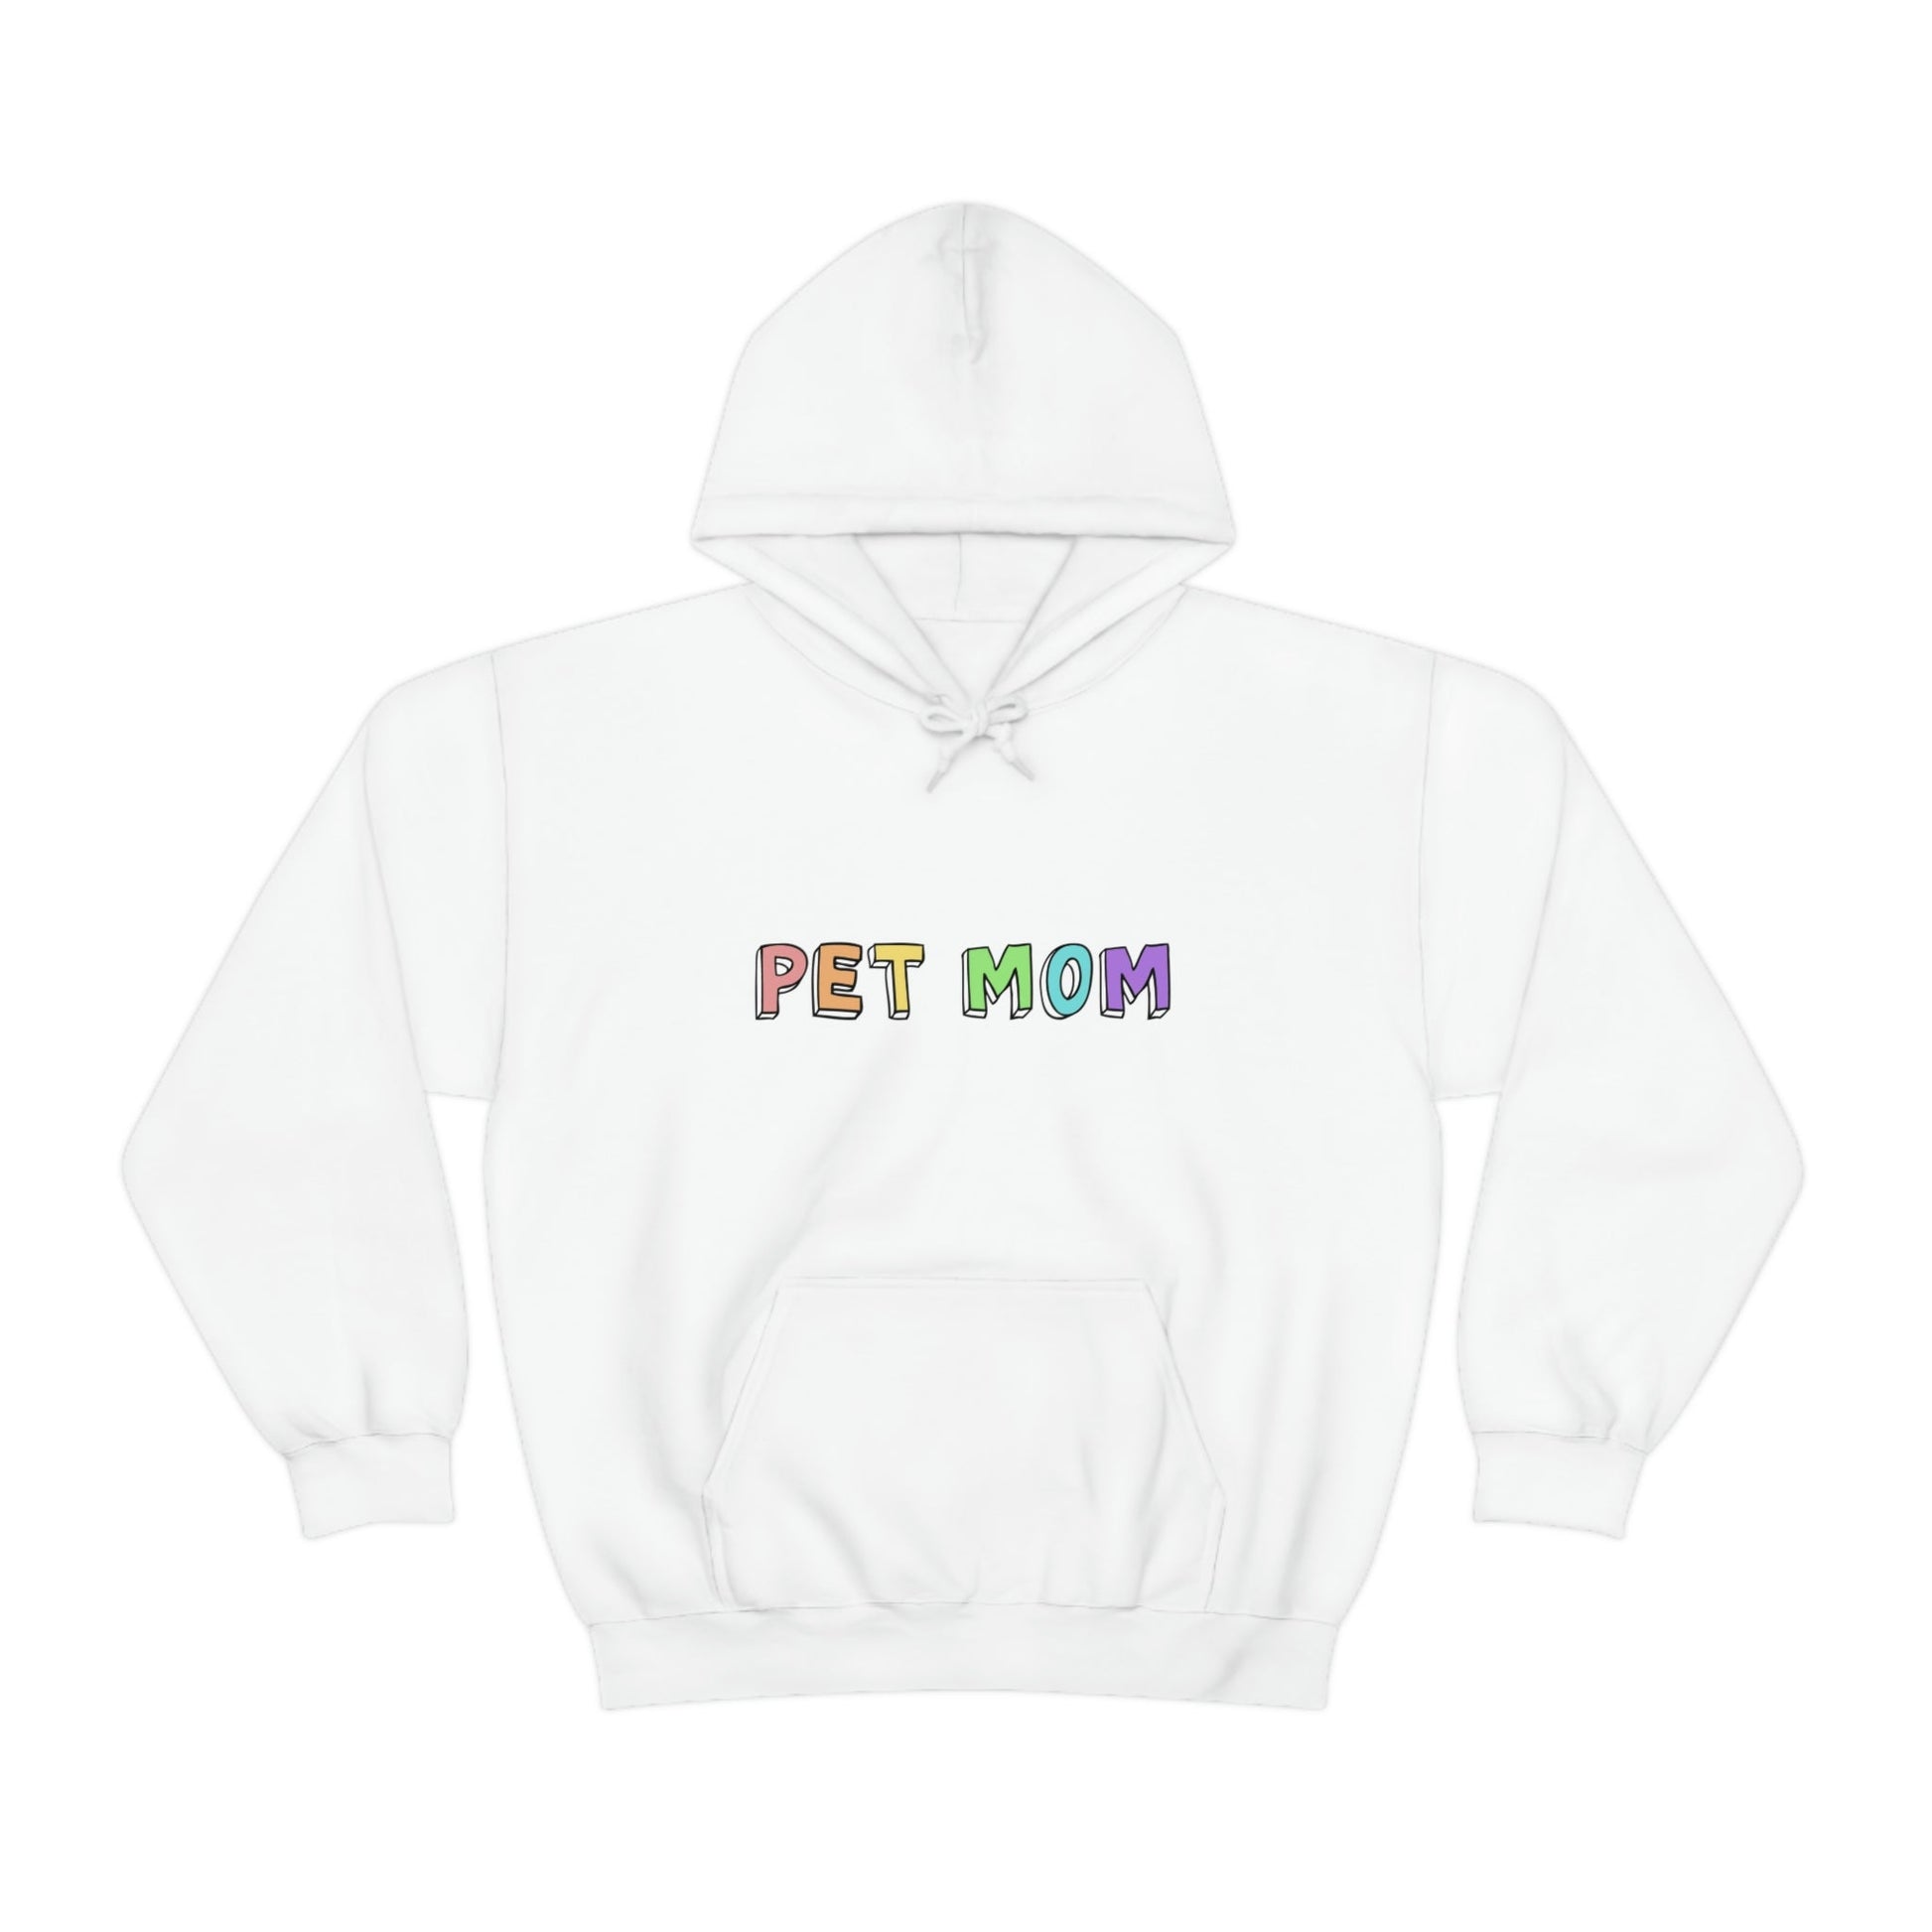 Pet Mom | Hooded Sweatshirt - Detezi Designs-19844890871294807146